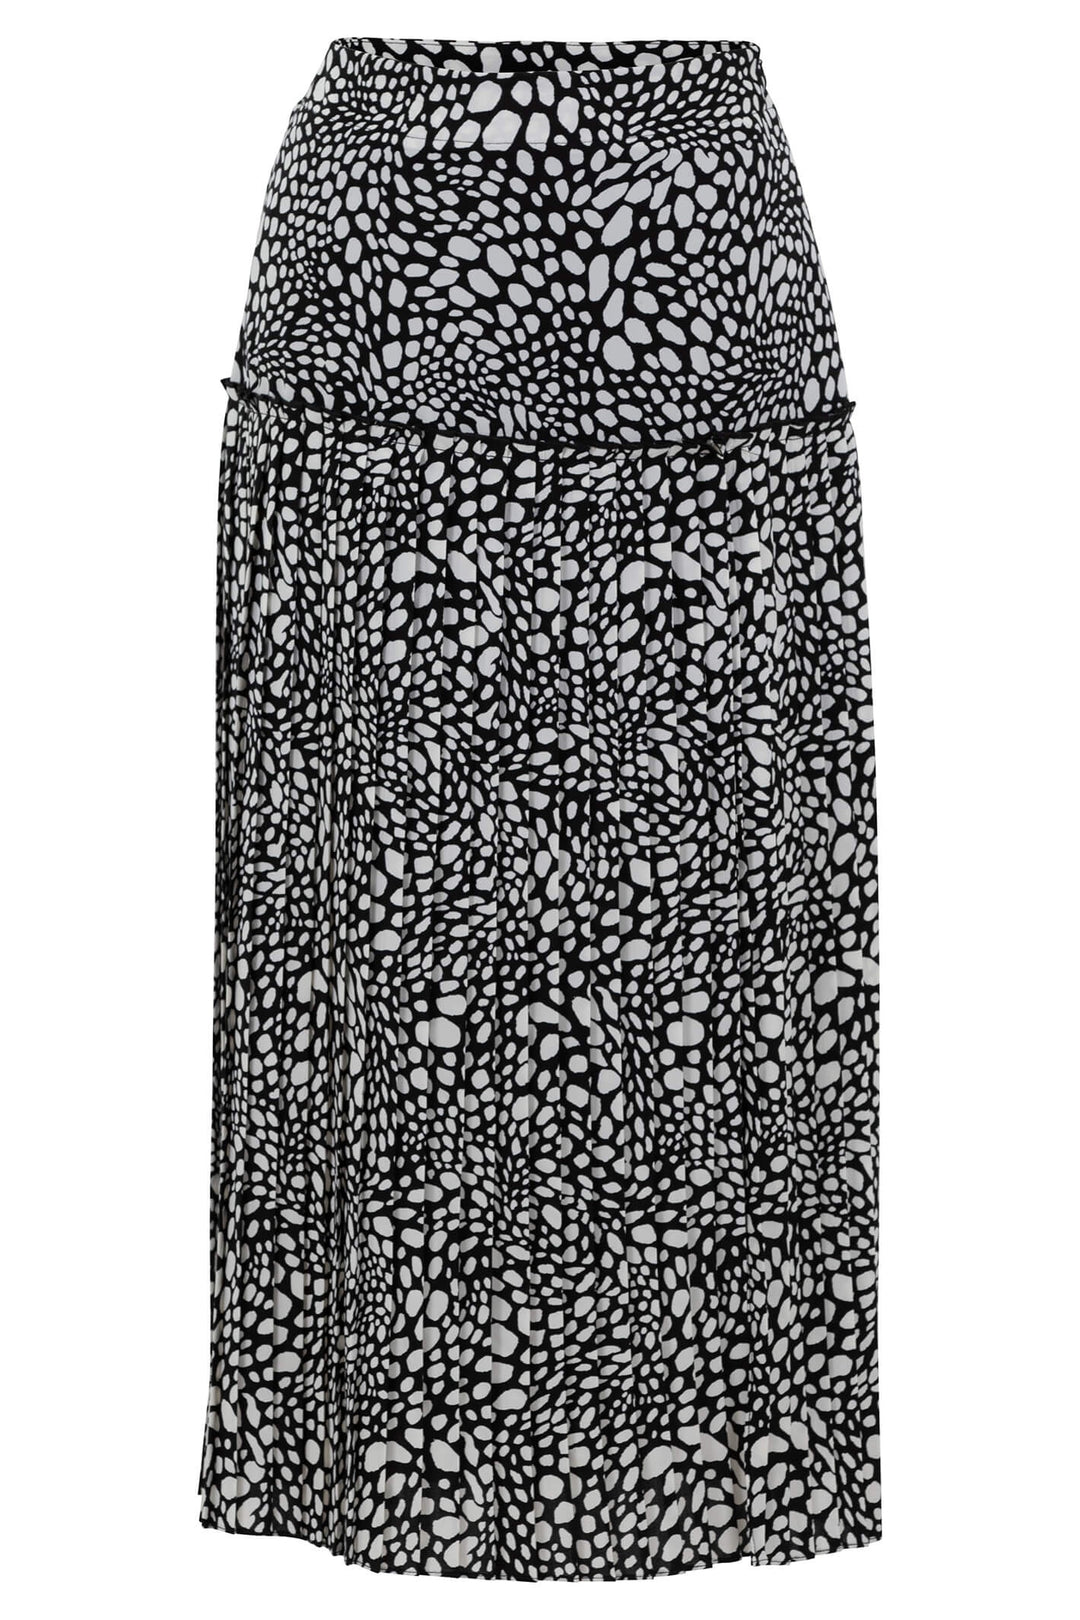 Marble 7085 101 Black White Dot Print Pleated Skirt - Dotique